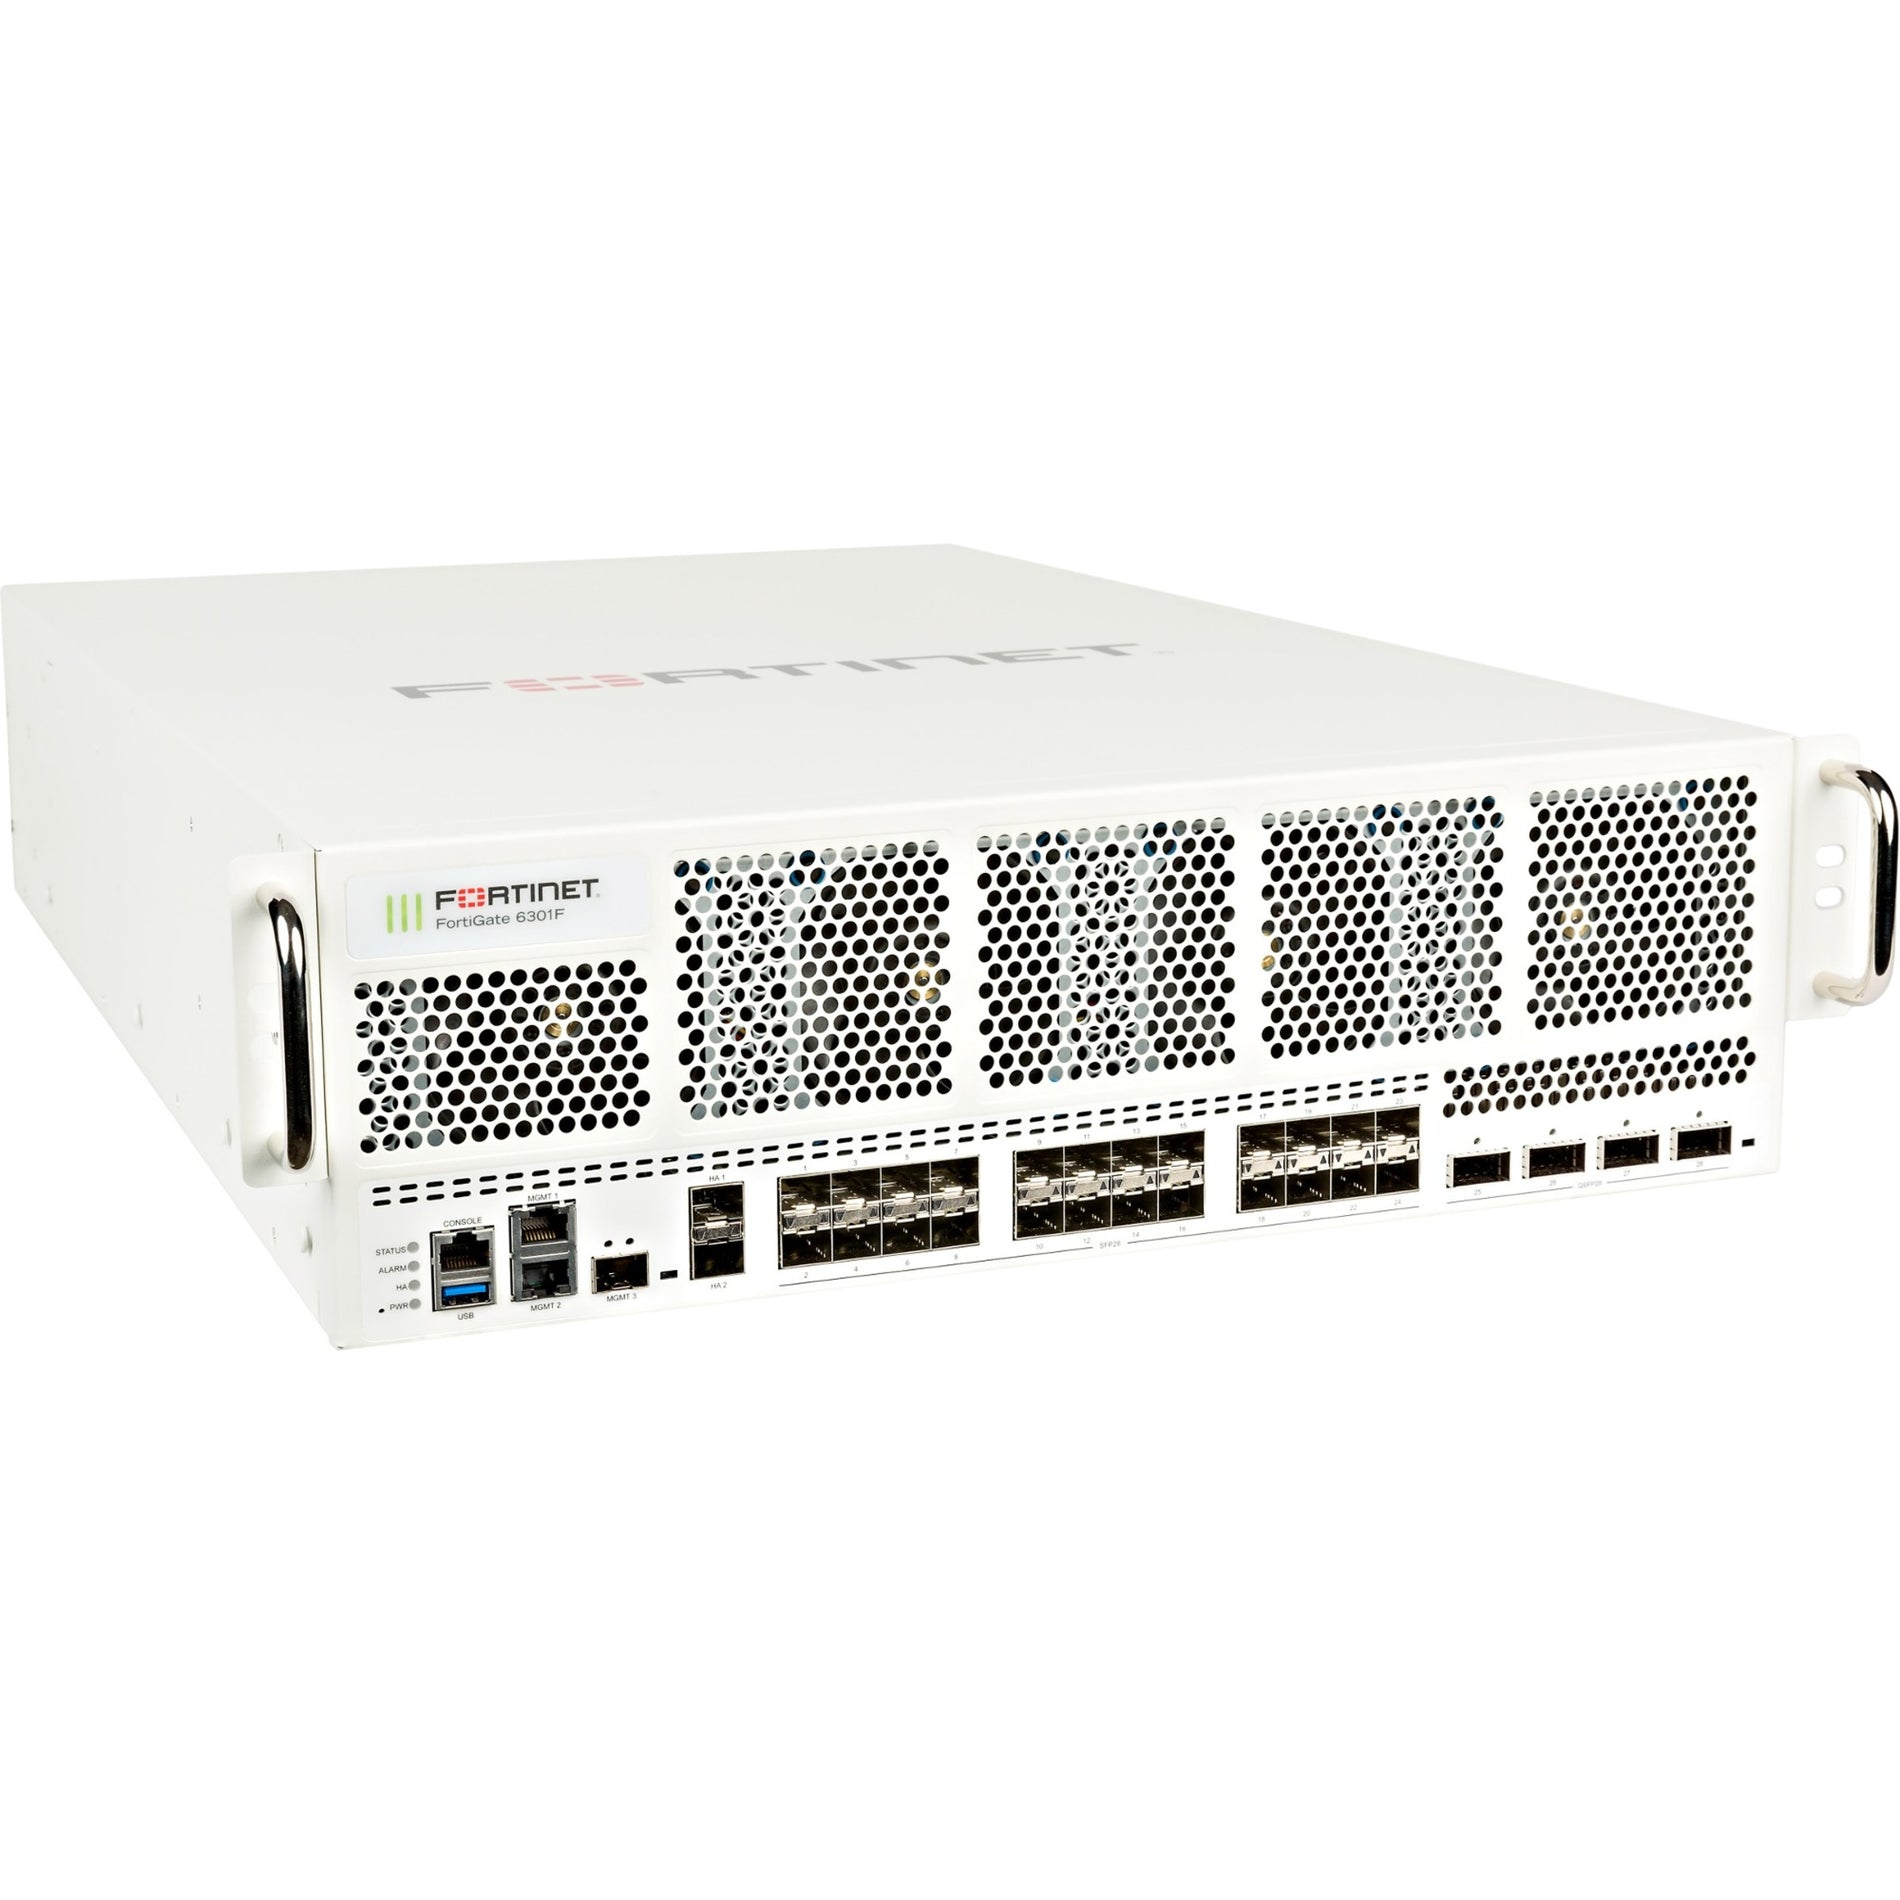 Fortinet FG-6301F-DC FortiGate Network Security/Firewall Appliance, 10GBase-X, 100 Gigabit Ethernet, 3U Rack-mountable